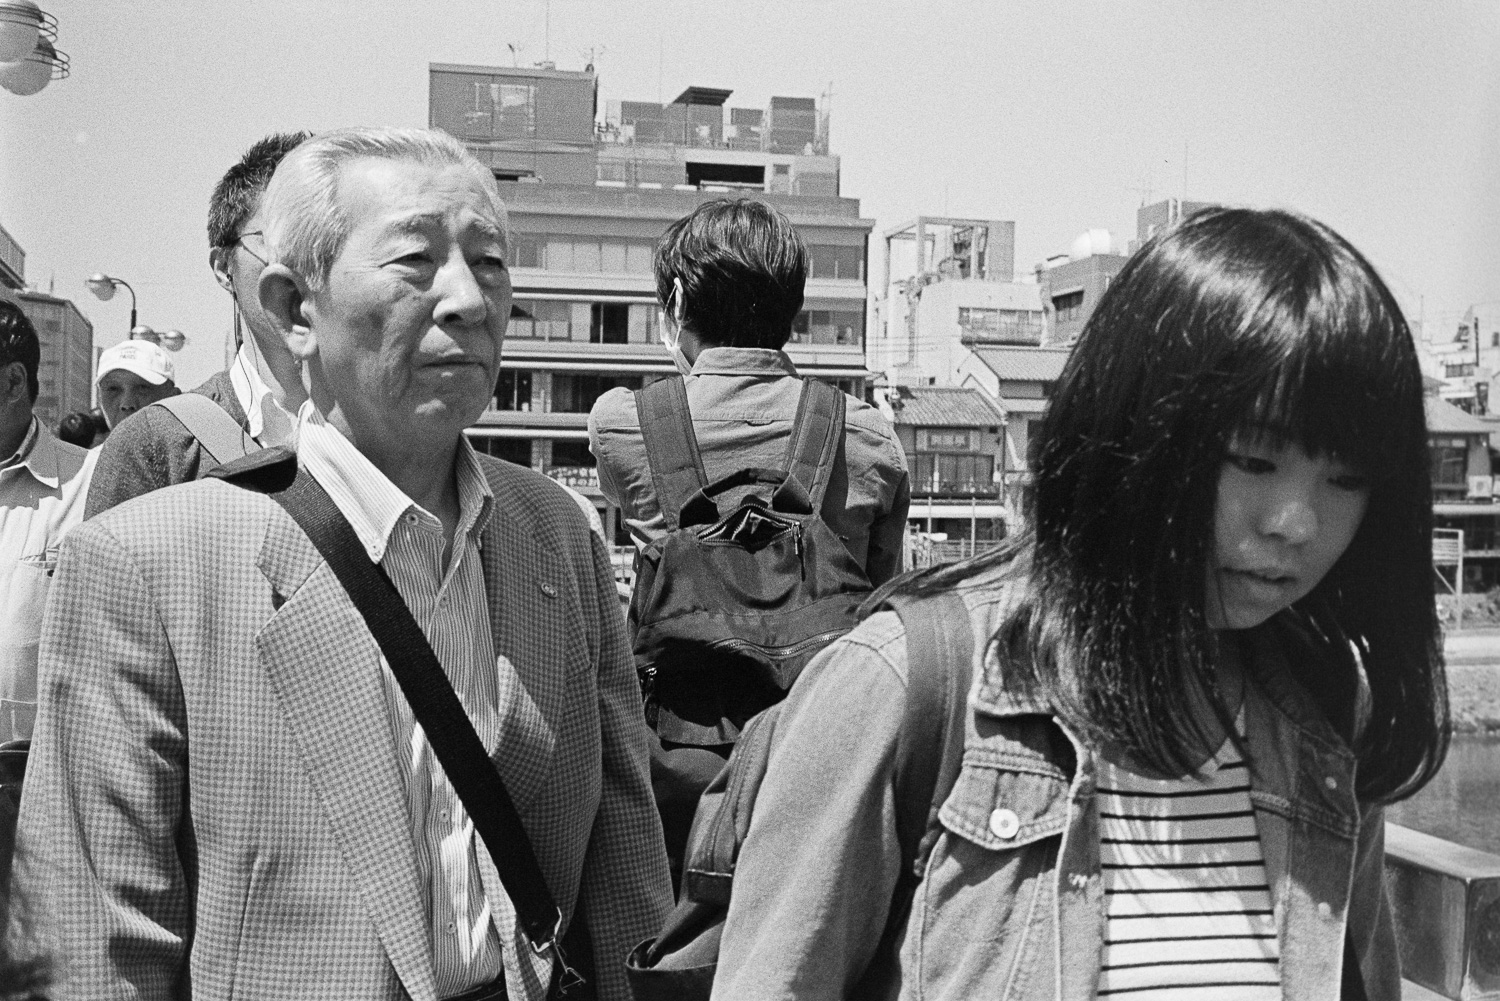 20170423 - Roll 133 - 024-Nick-Bedford,-Photographer-Black and White, Film, Japan, Kodak Tri-X 400, Kyoto, Rodinal, Street Photography, Travel.jpg